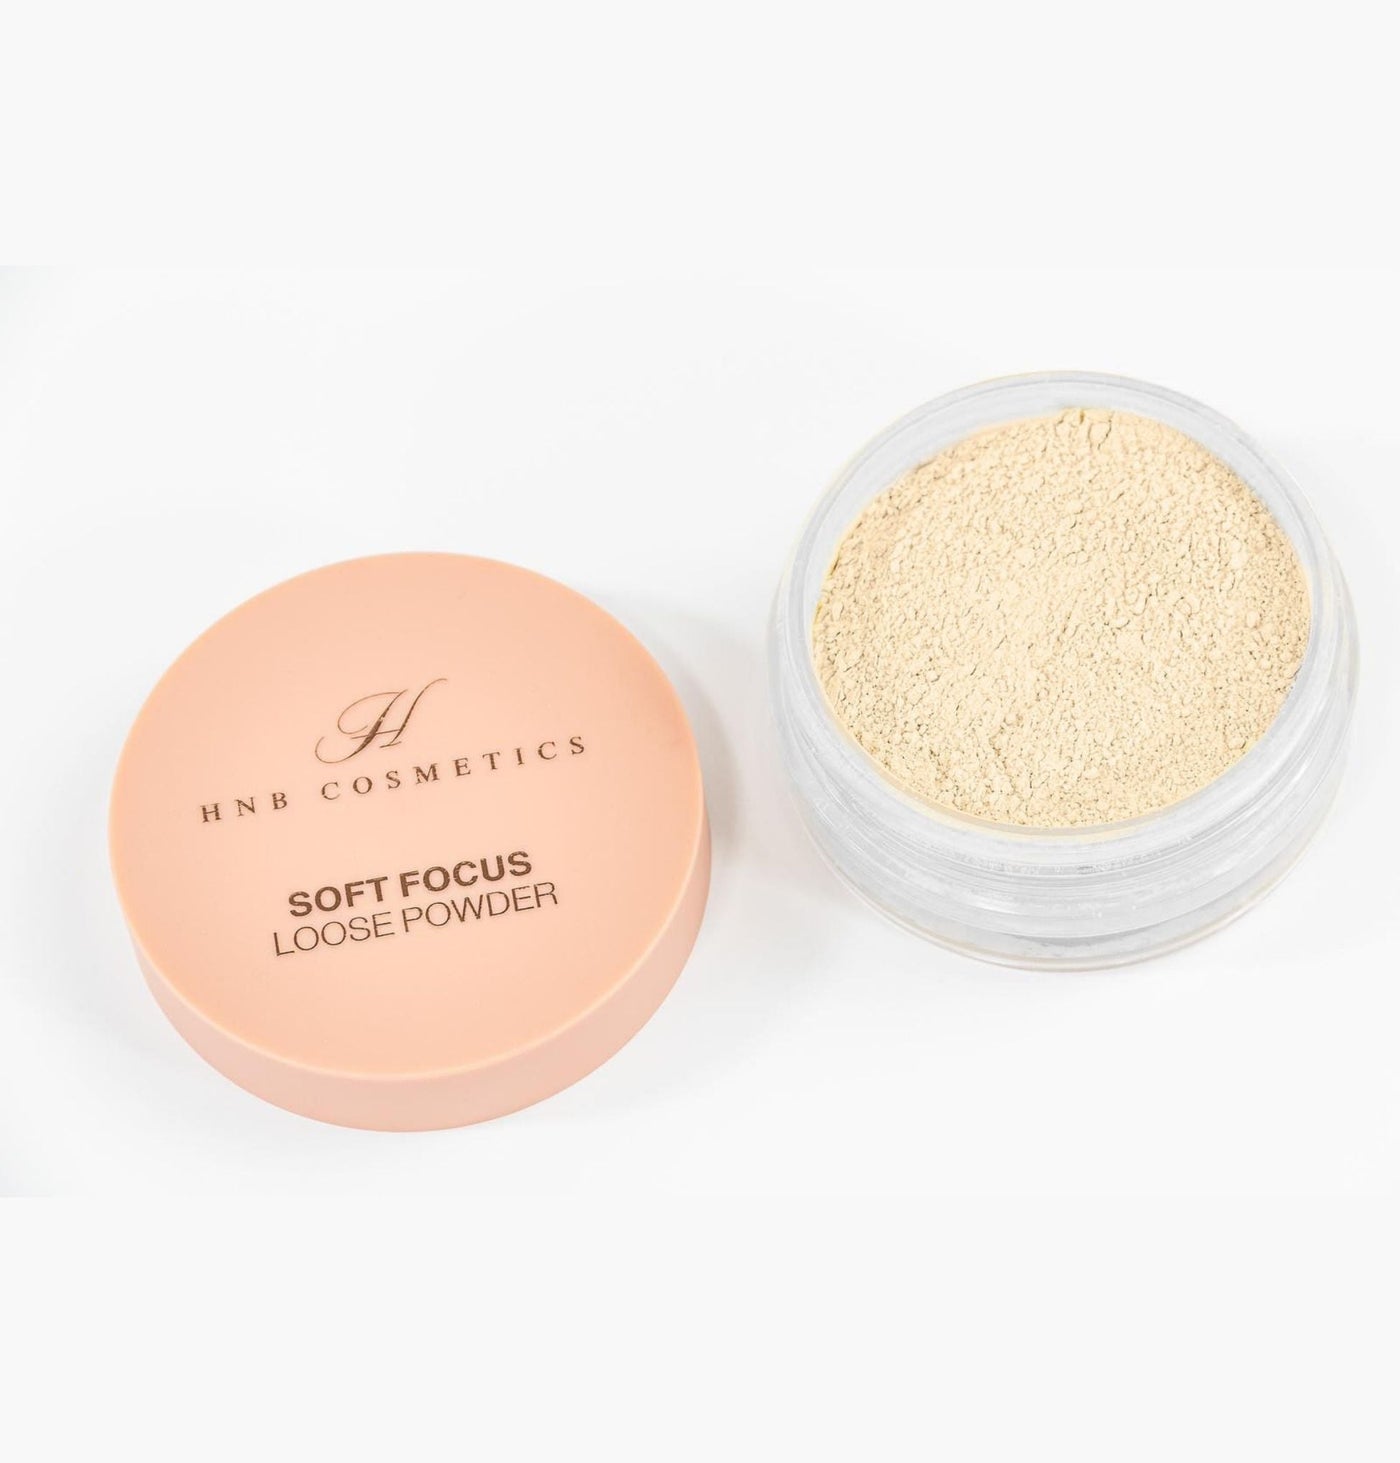 HNB Cosmetics - Soft Focus Loose Powder